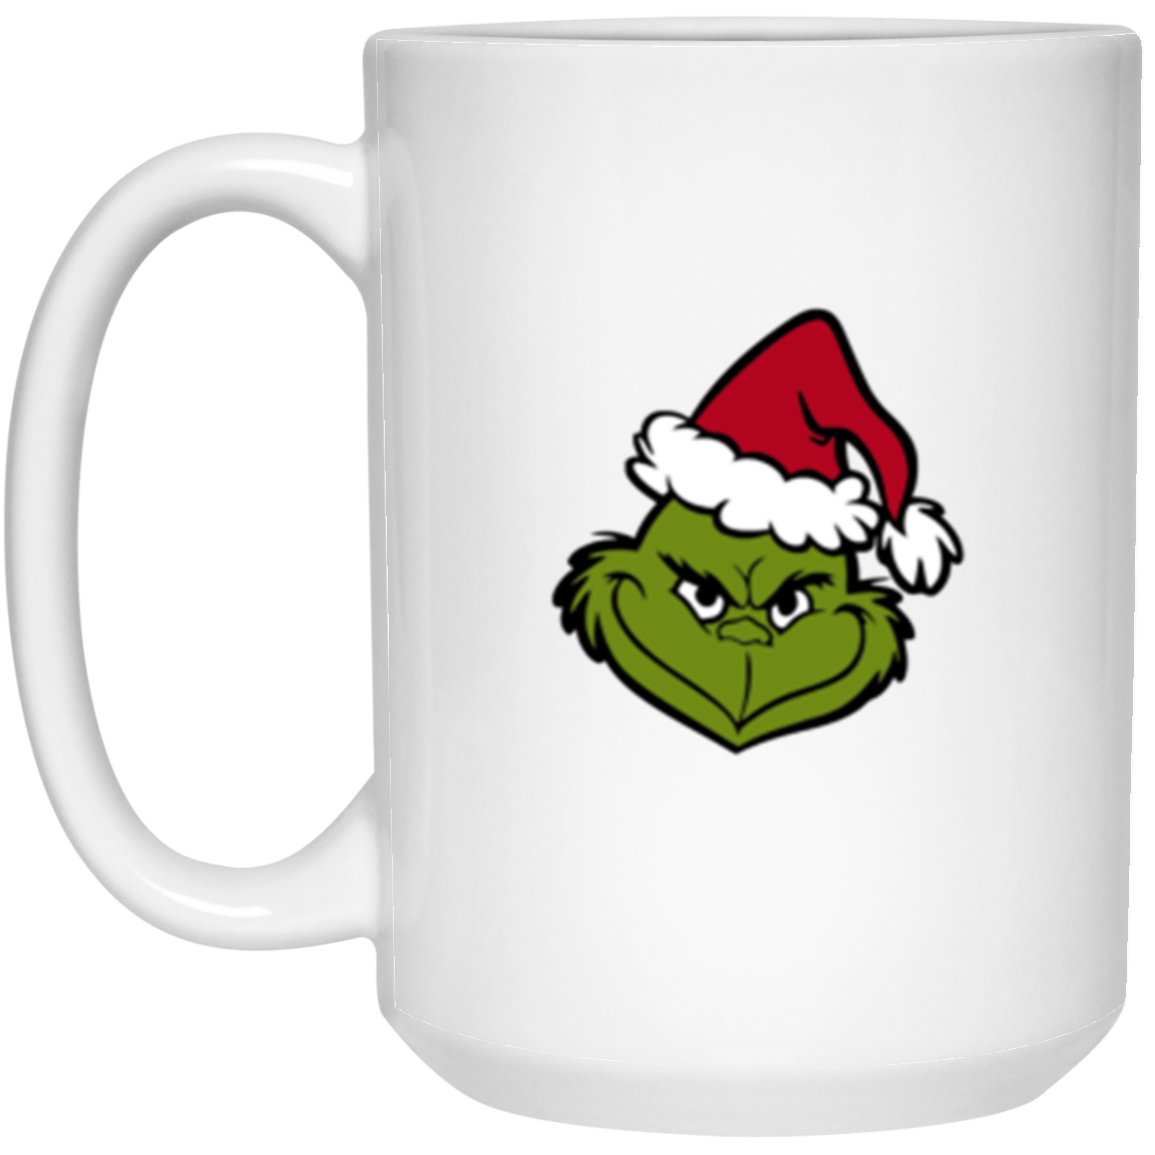 My Day, I'm Booked, The Grinch Christmas - 11 & 15 oz. White Mug